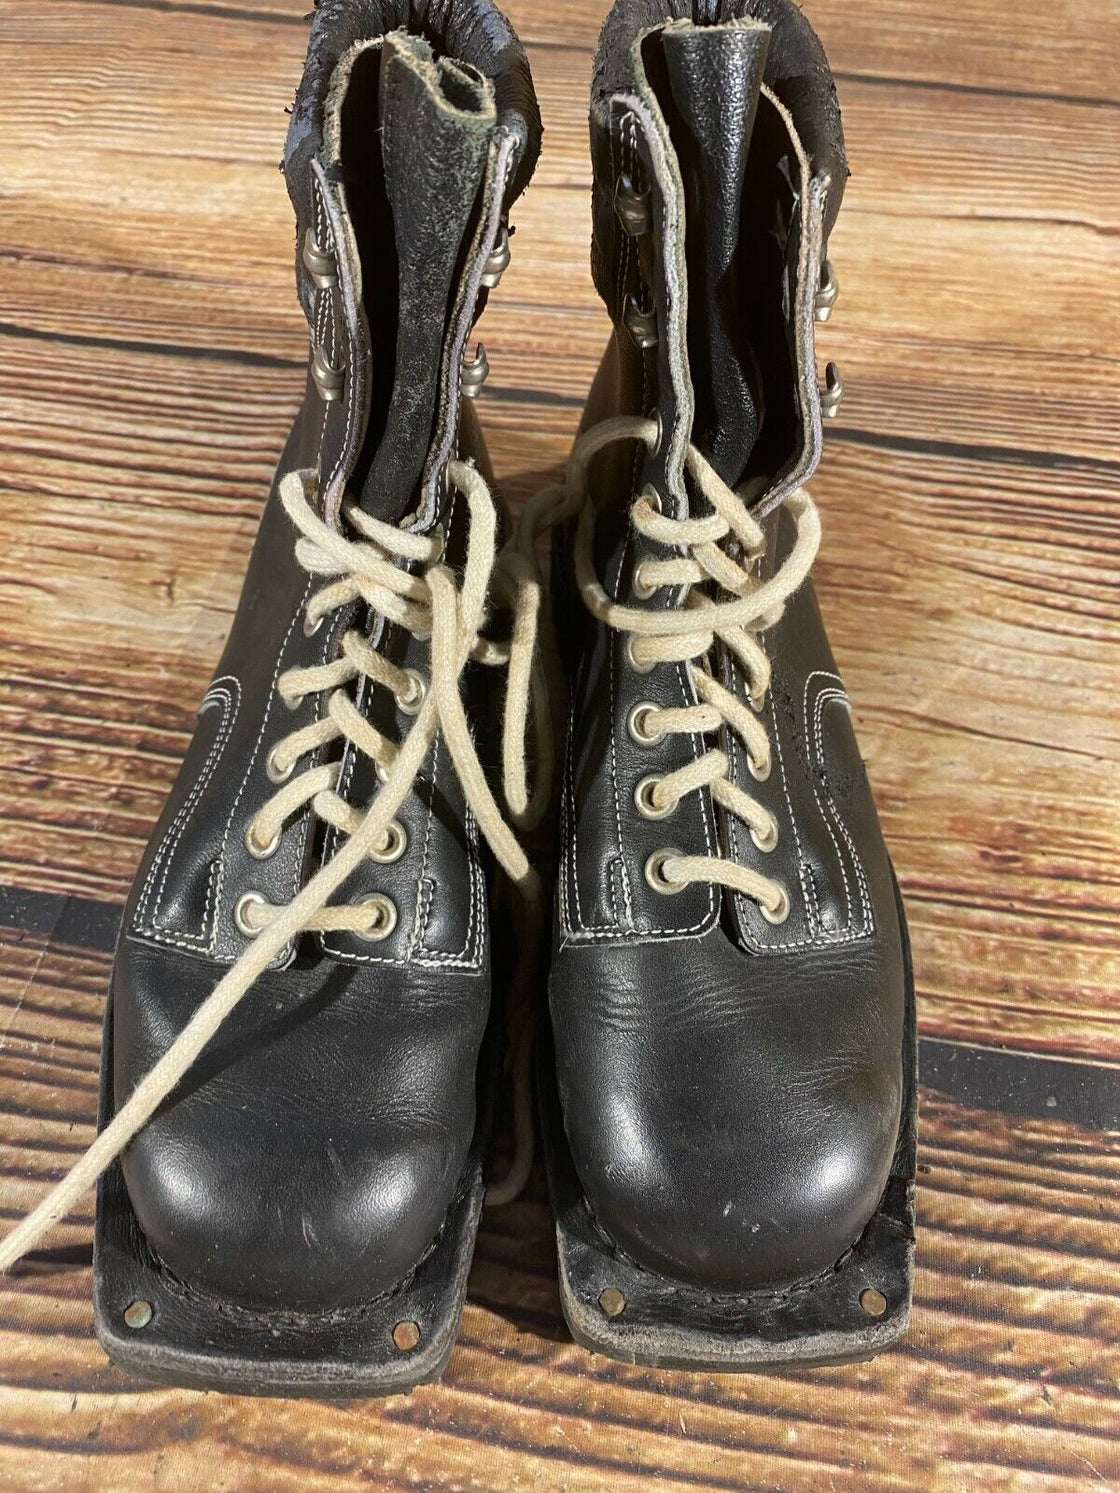 DALEX Vintage Nordic Cross Country Ski Boots EU38, US5.5 Kandahar Cable Bindings